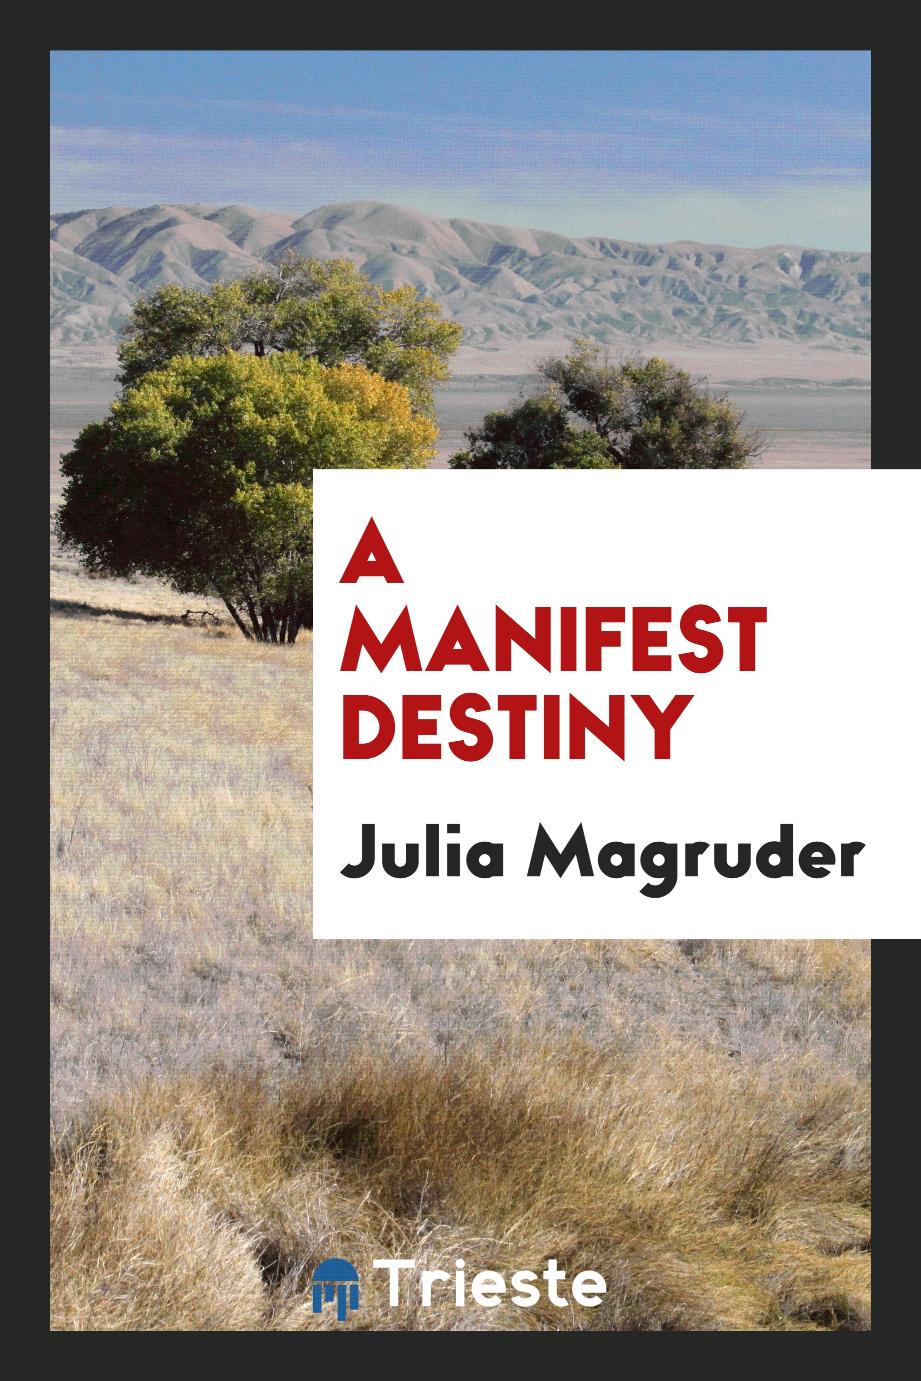 A manifest destiny